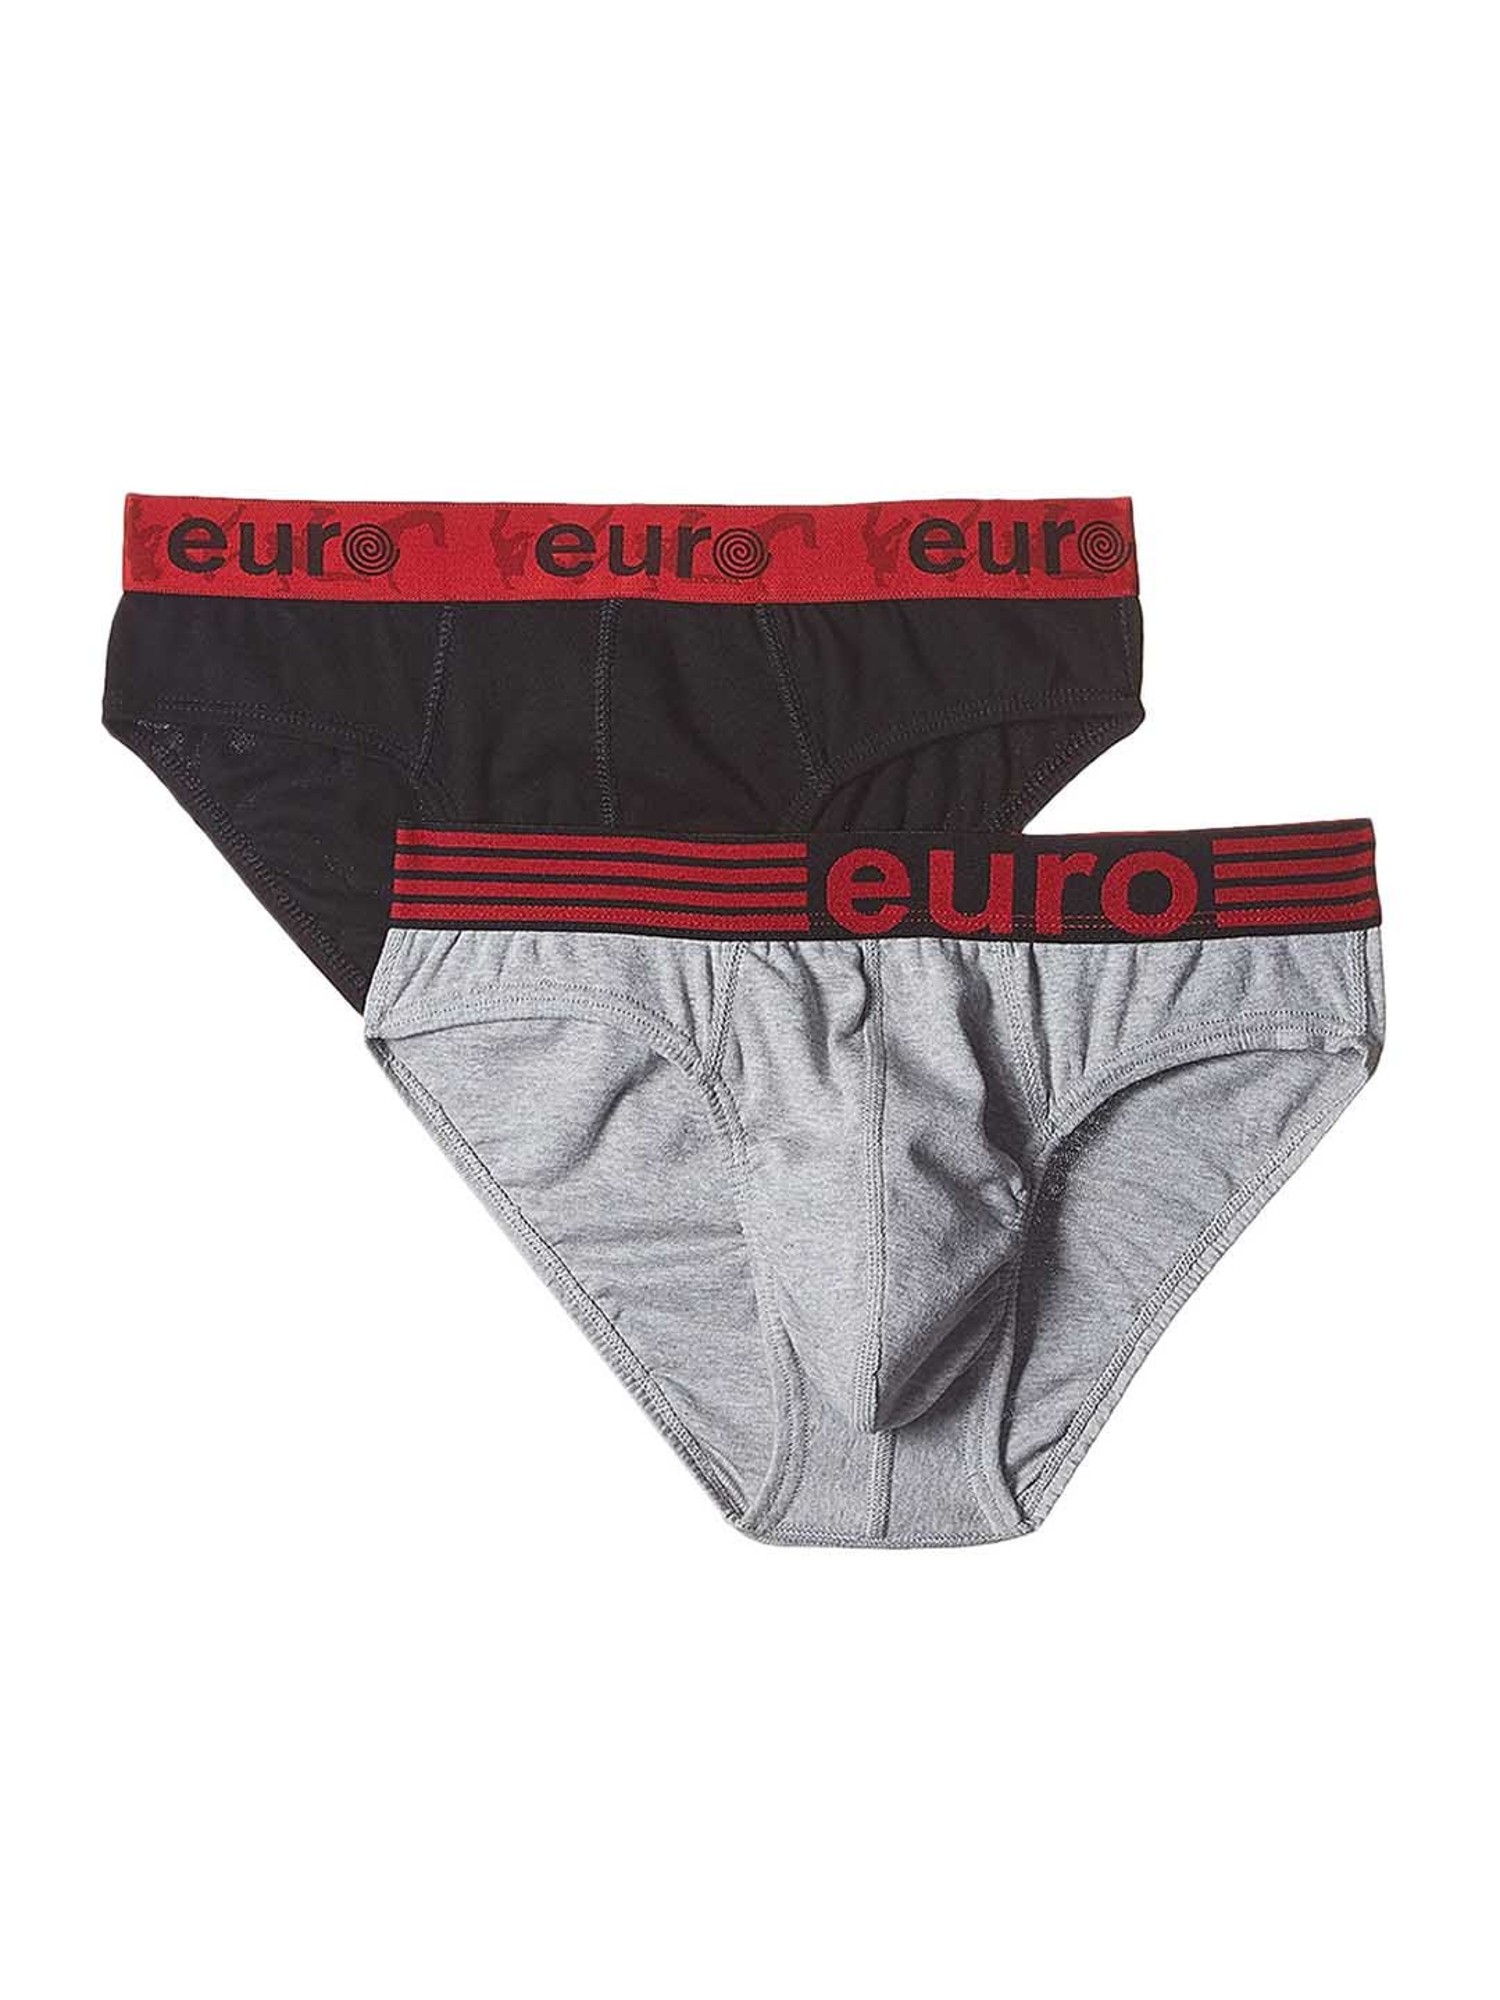 Pure Cotton Plain Men Euro Gray Underwear, Type: Briefs at Rs 640